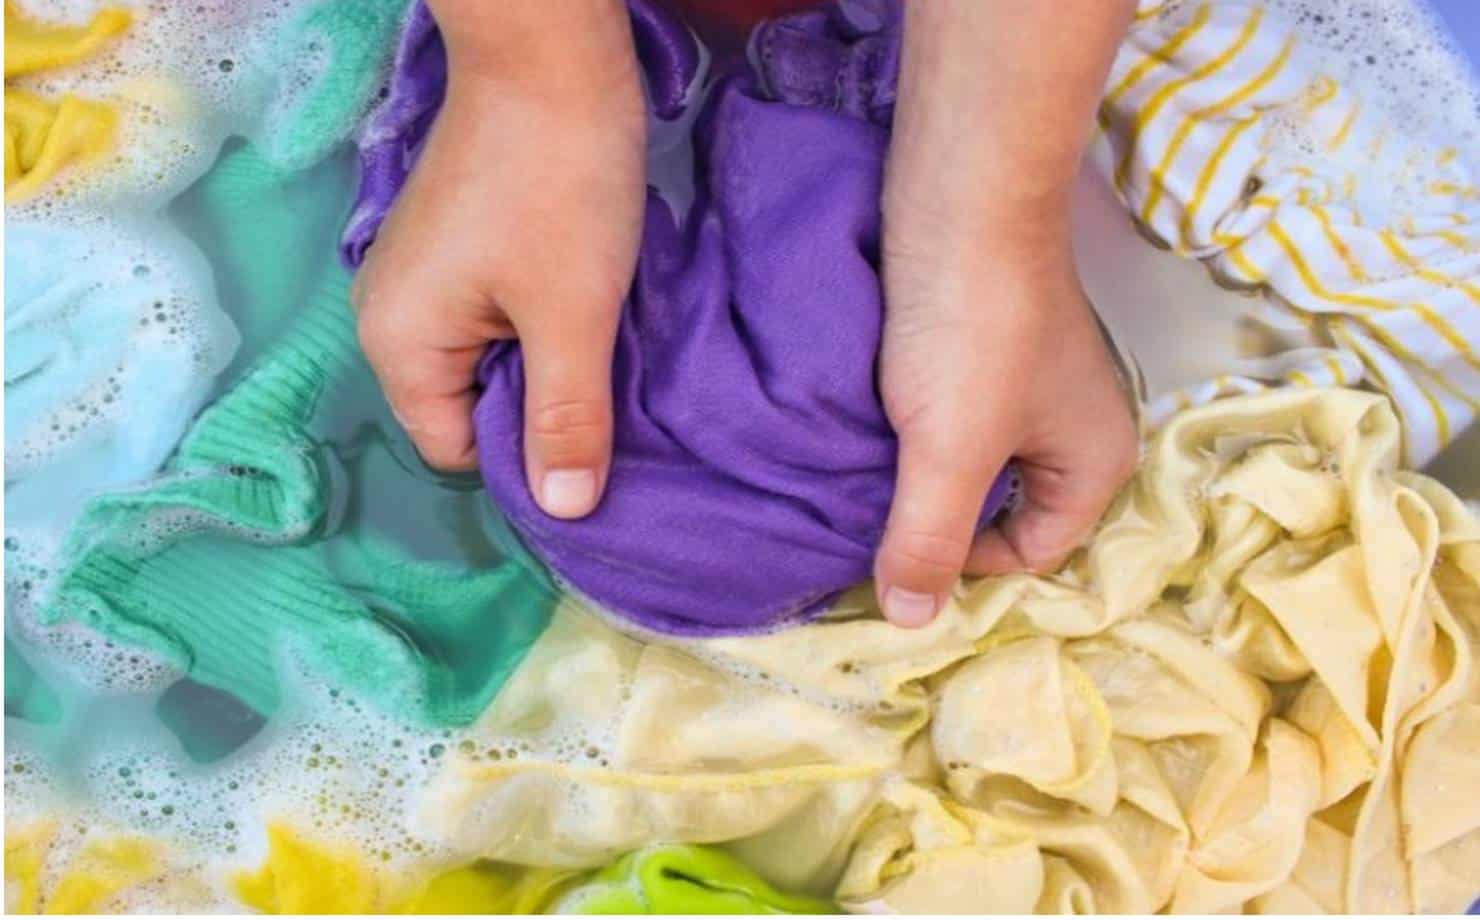 Roupas coloridas sendo lavadas